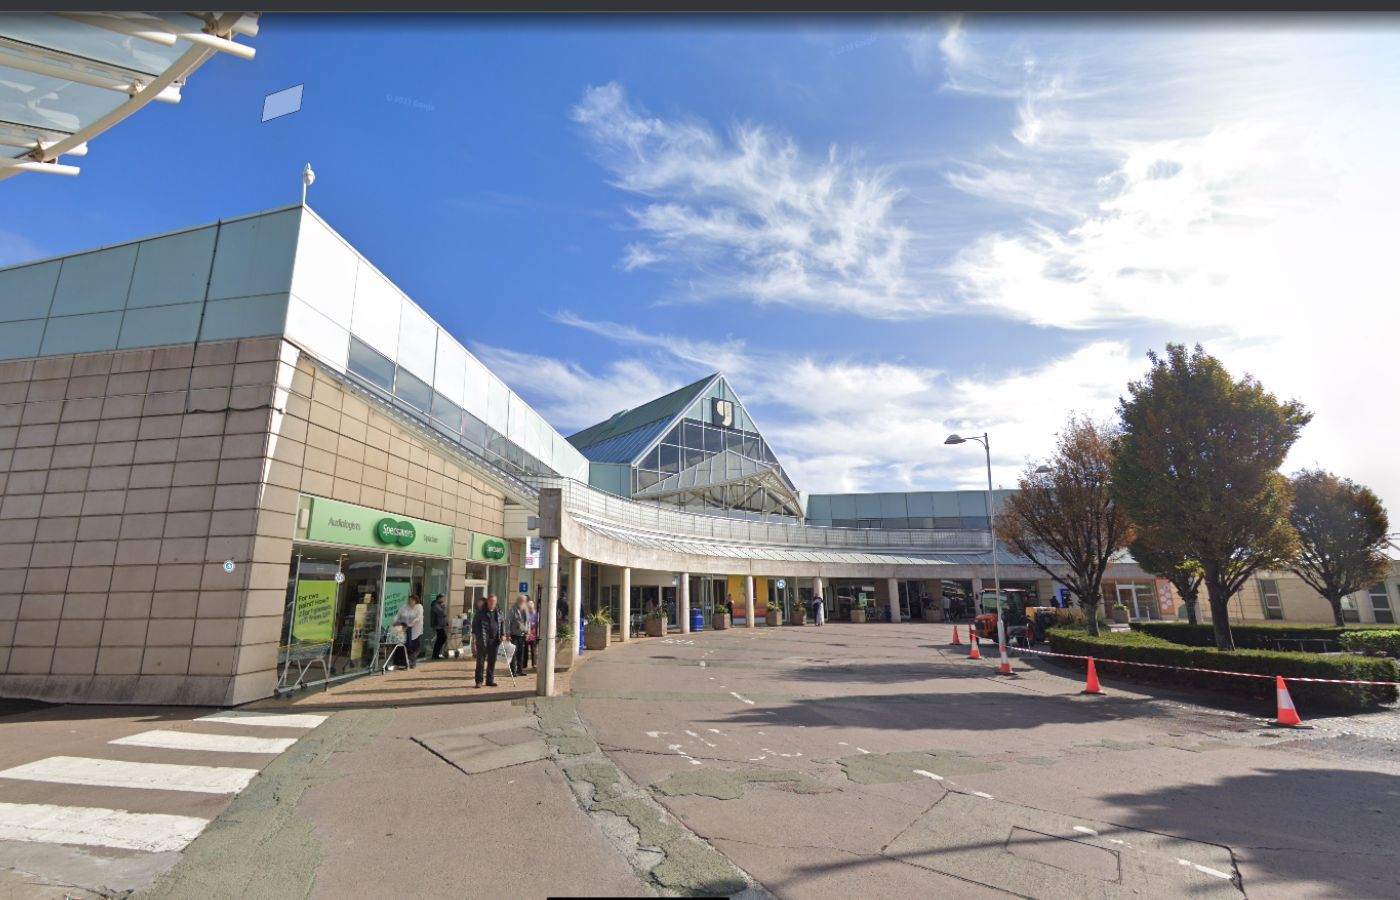 The robbery happened near Gyle Shopping Centre in Edinburgh.